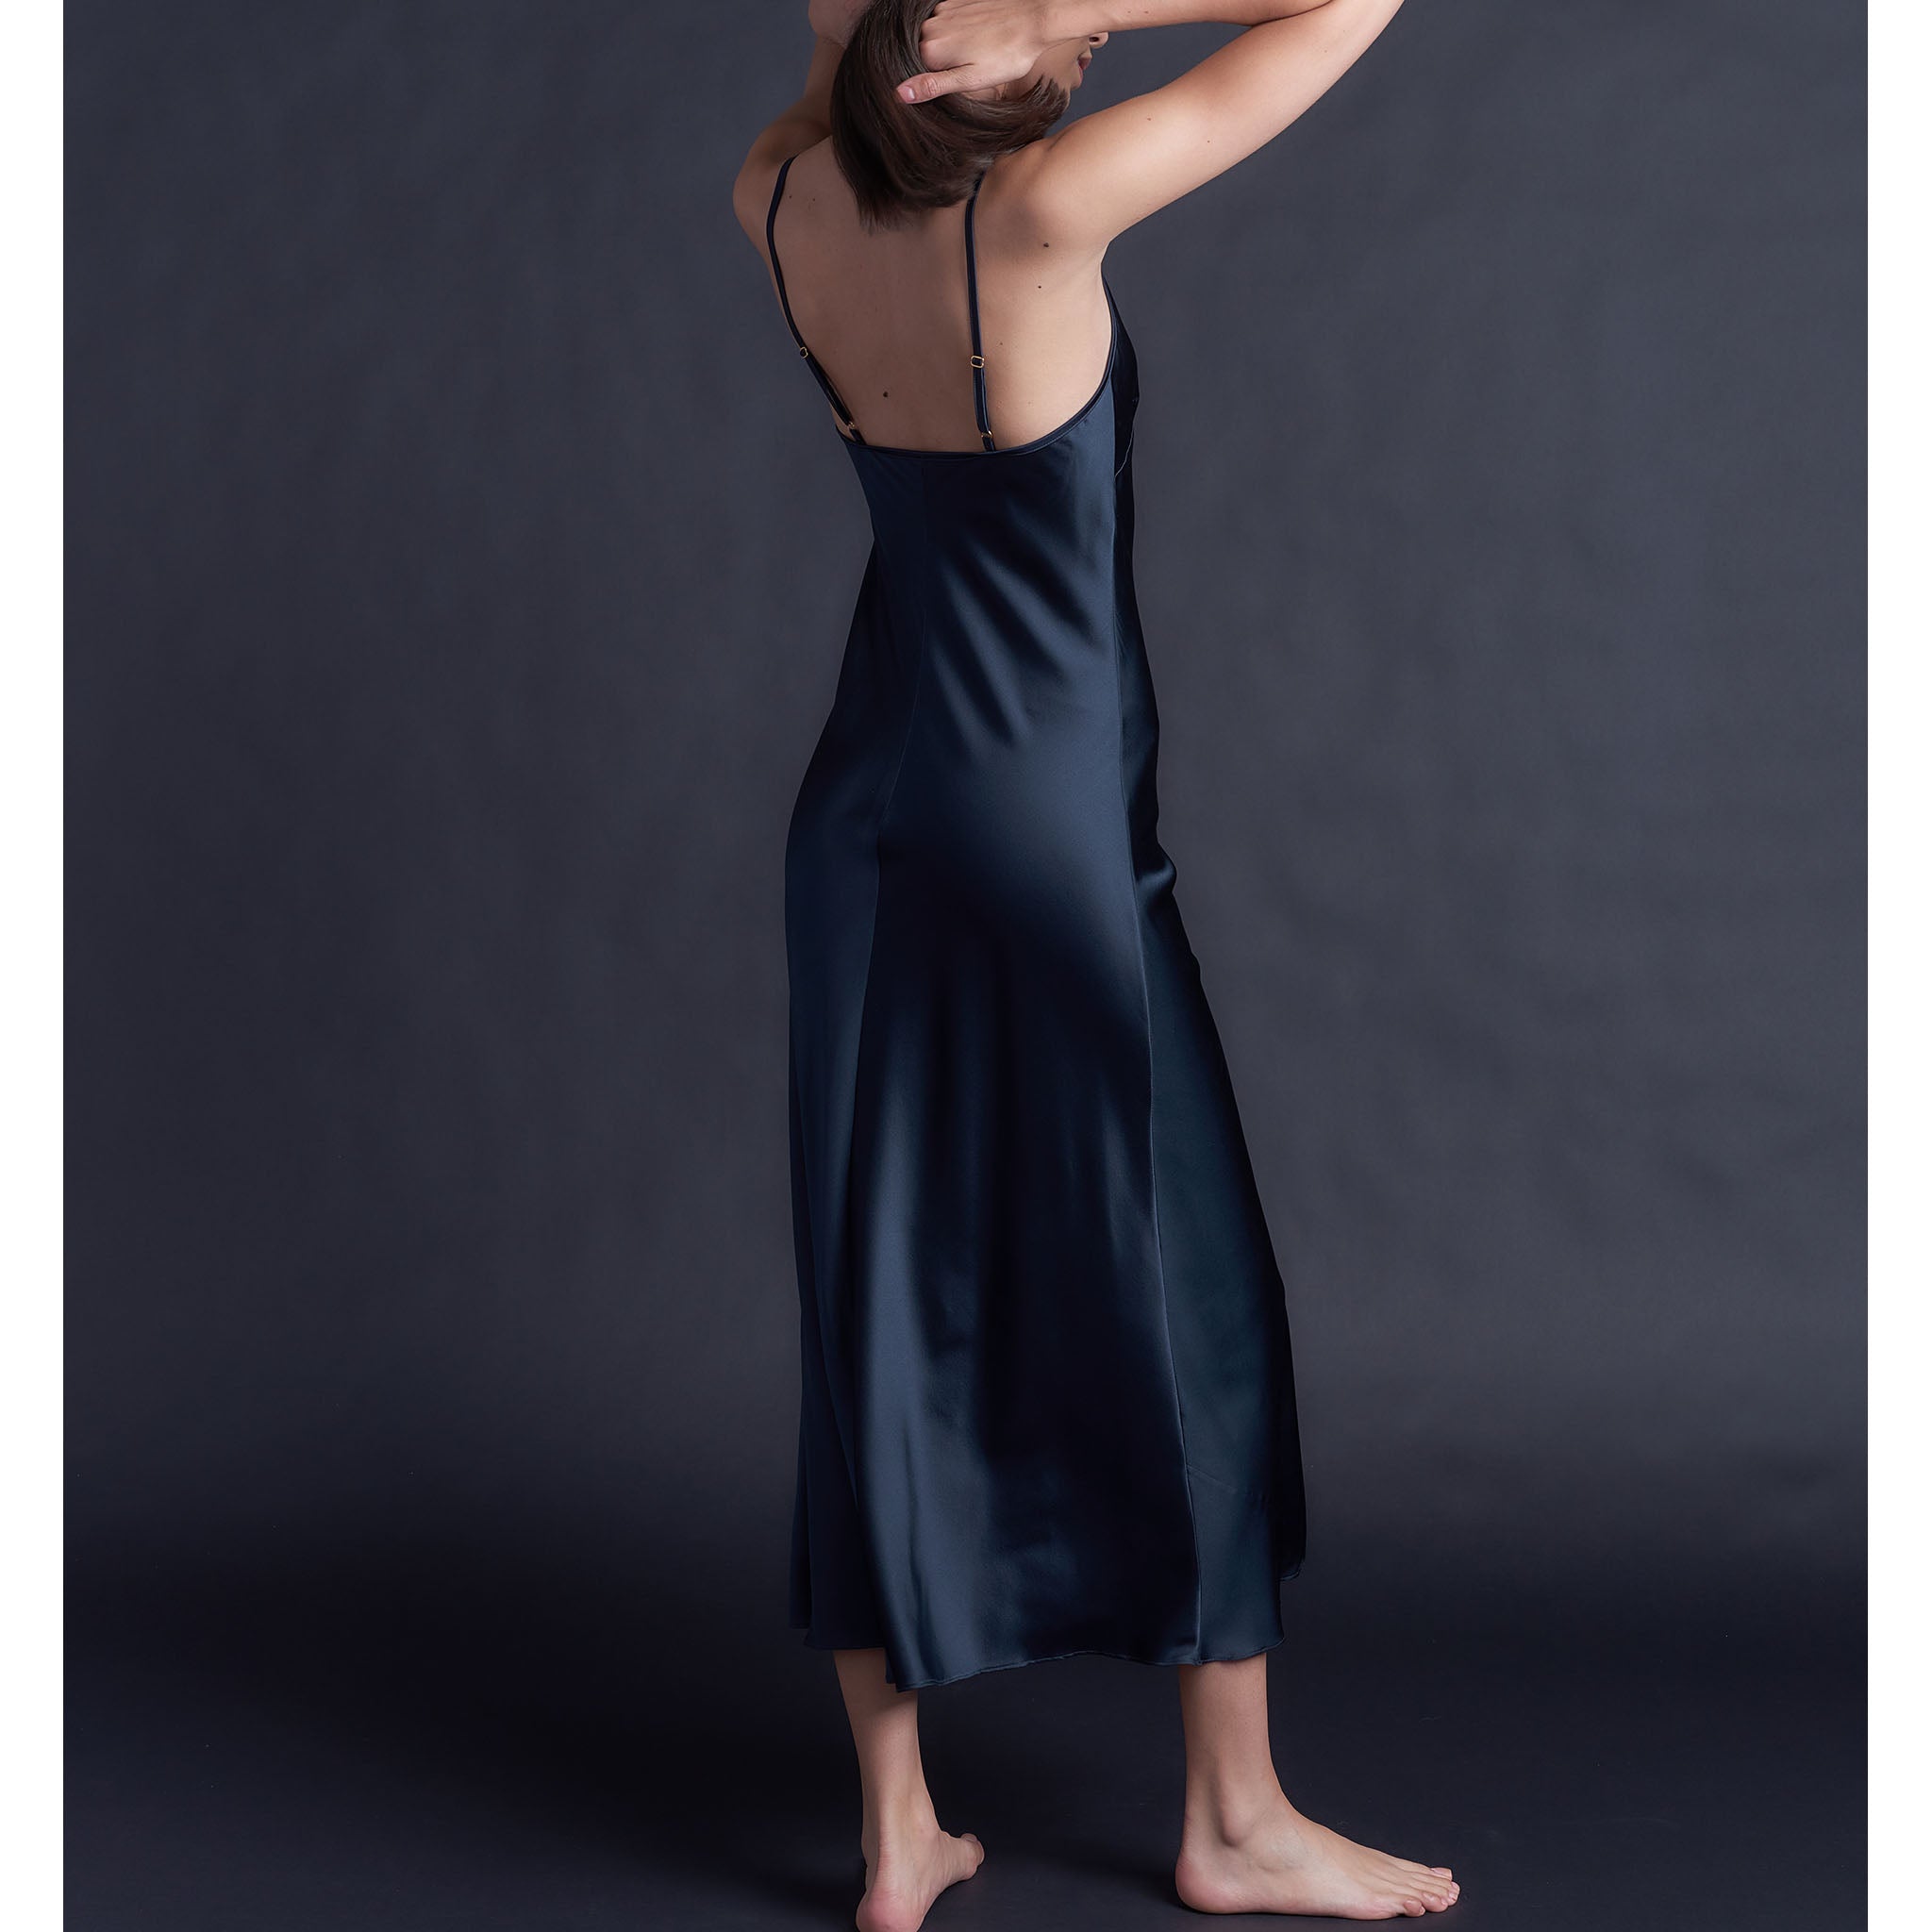 Juno Slip Dress in Sapphire Silk Charmeuse